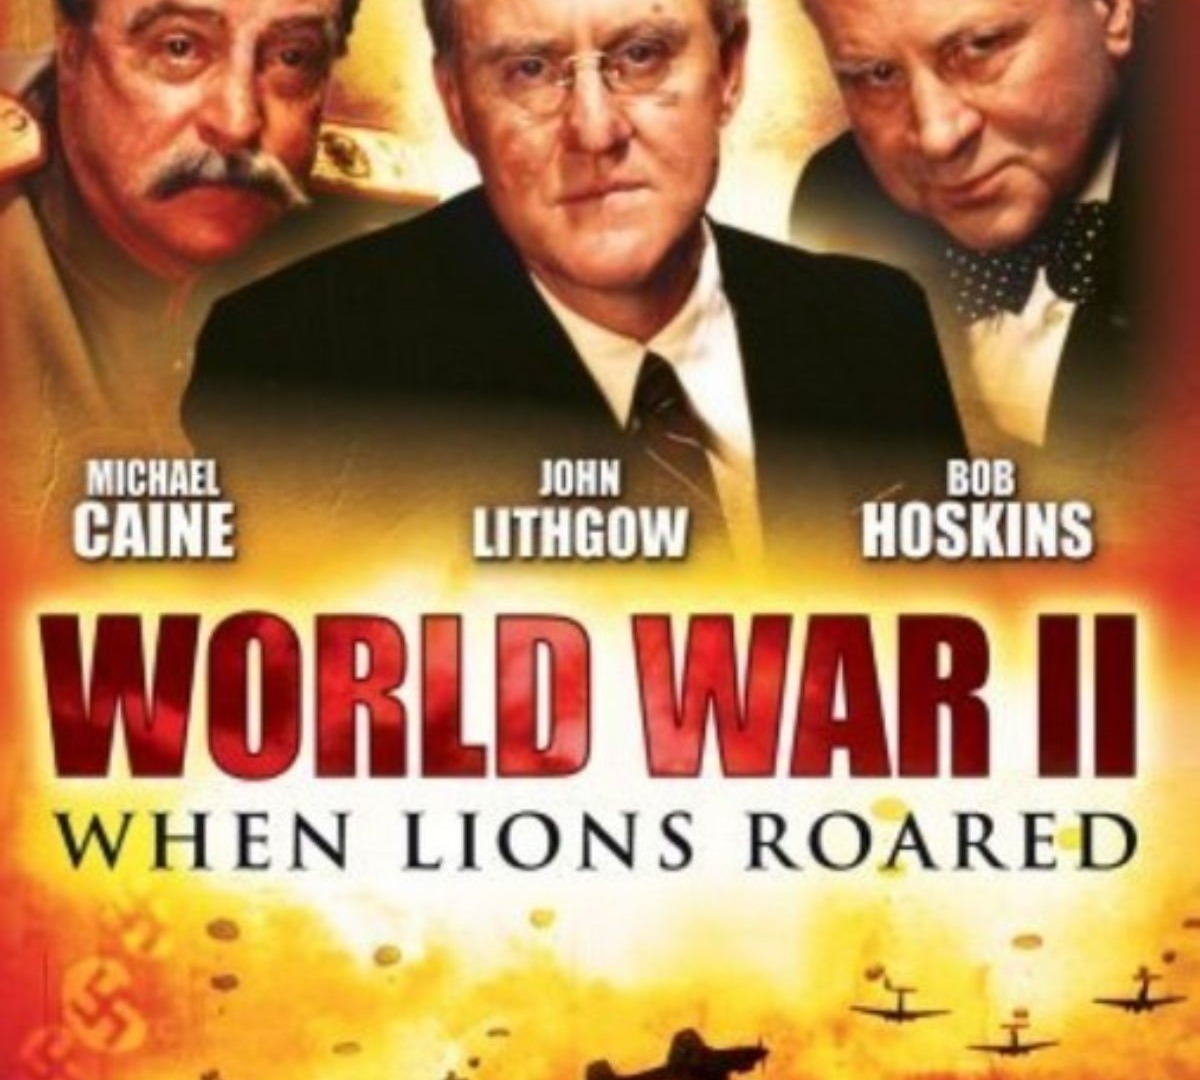 Show World War II: When Lions Roared